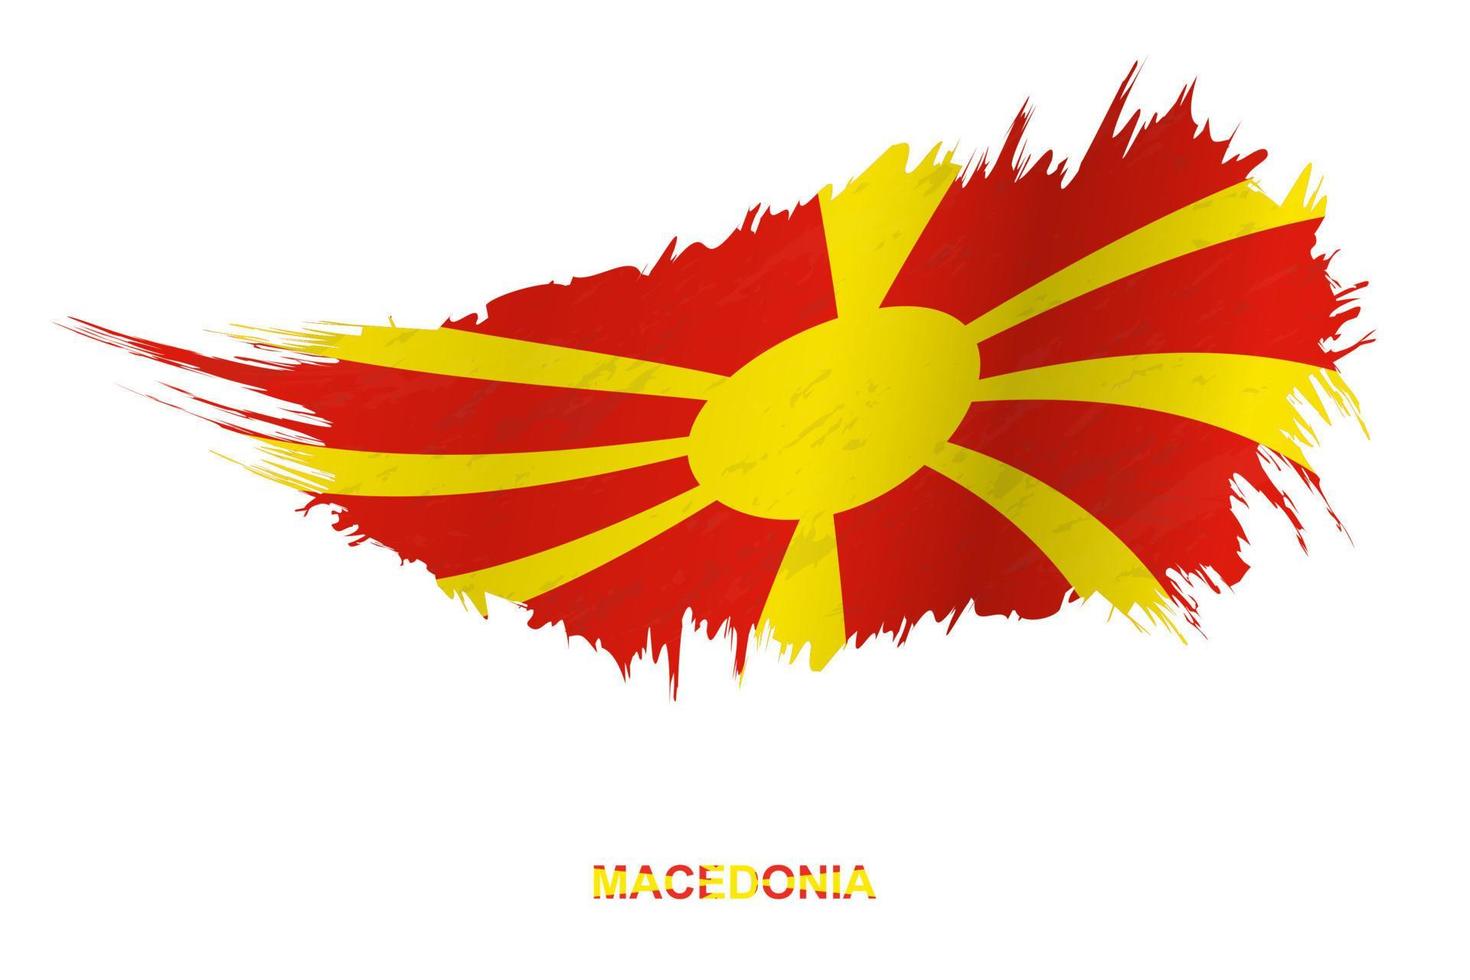 bandera de macedonia en estilo grunge con efecto ondulante. vector